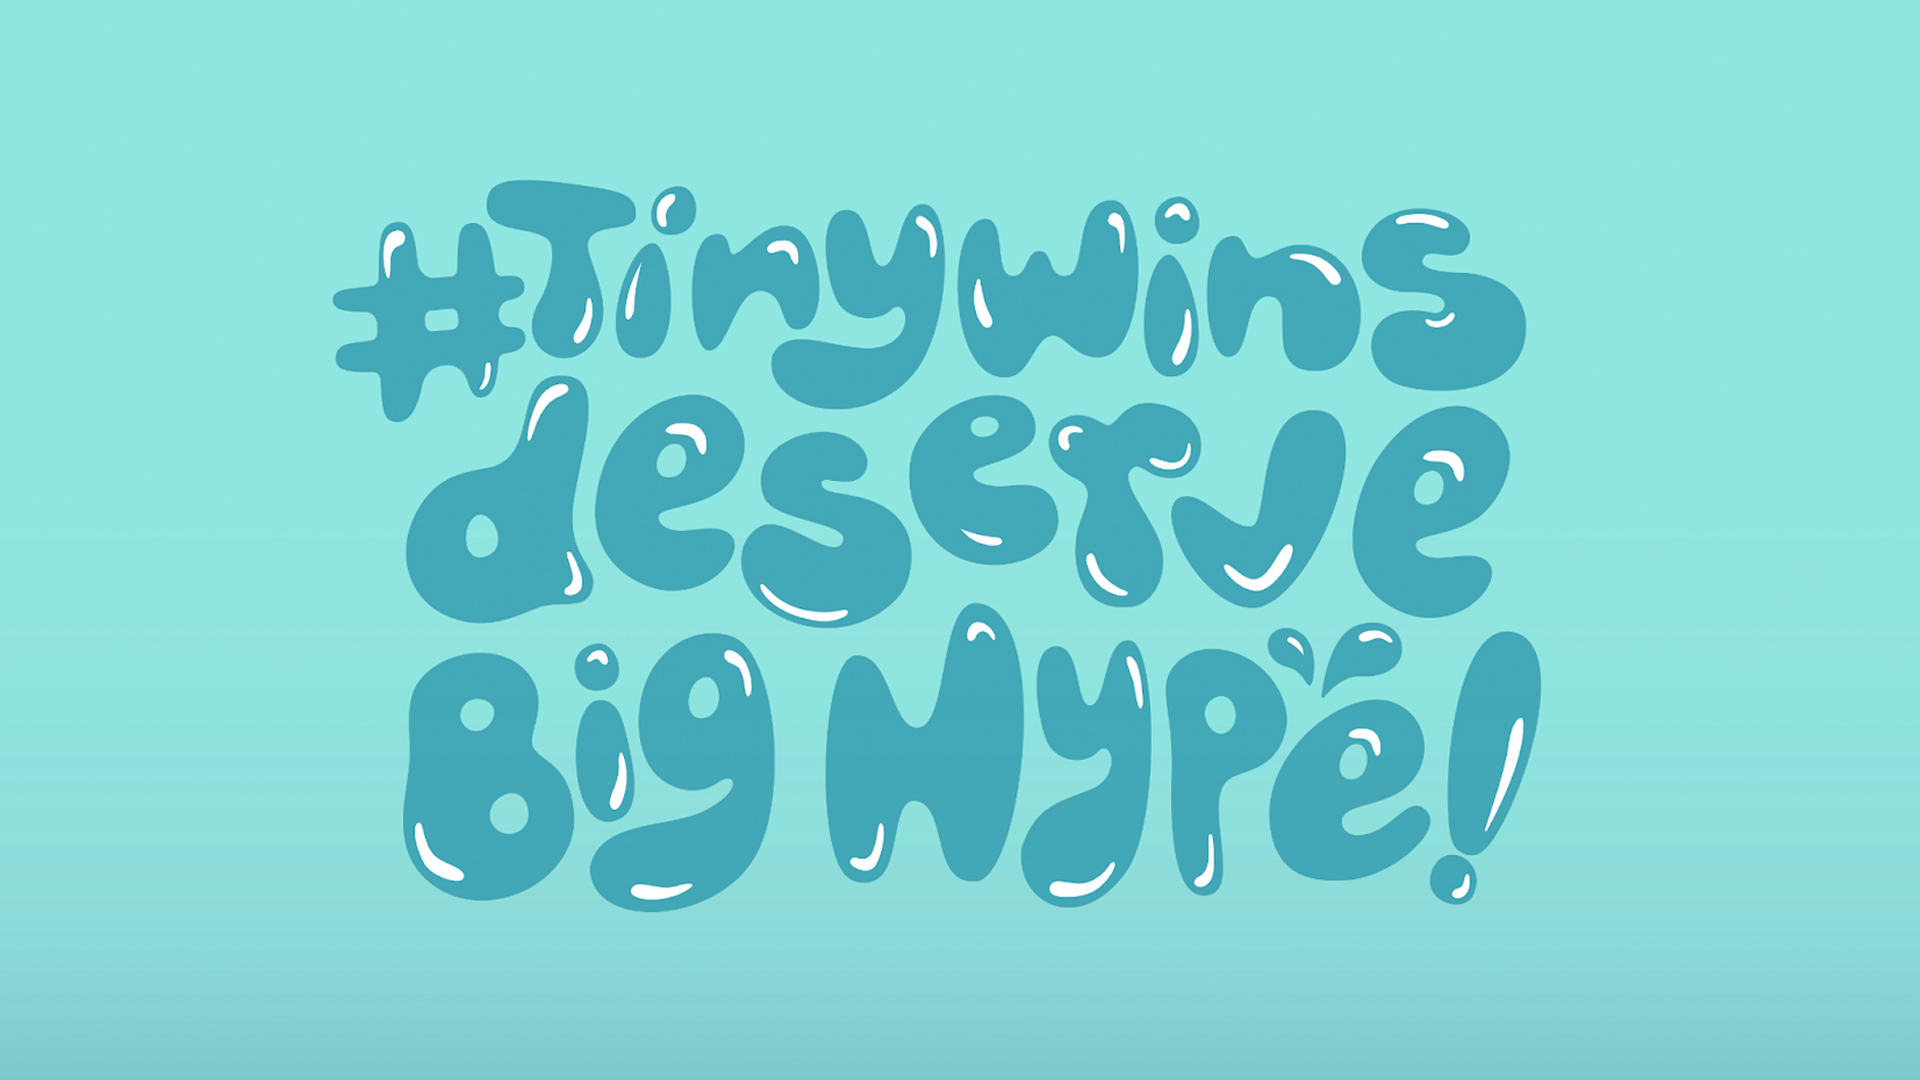 Tiny wins deserve big hype!